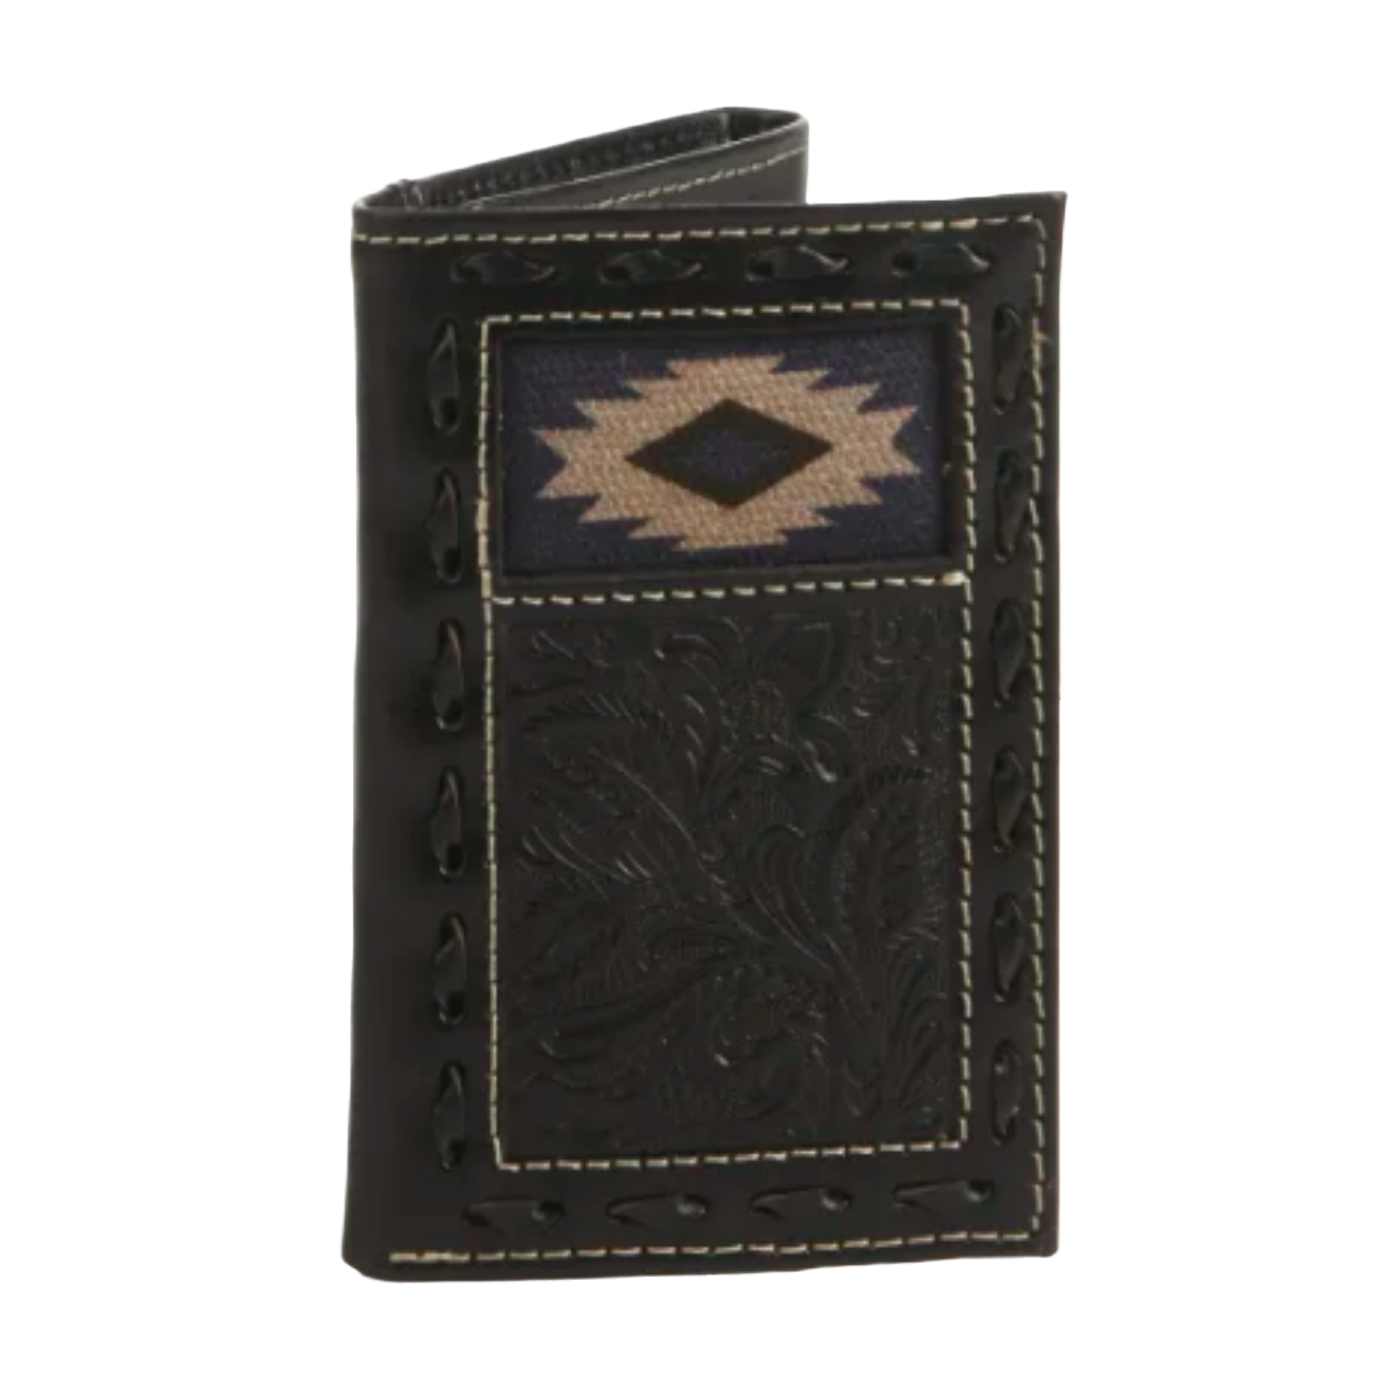 Nocona® Men's Tooled & Aztec Black Leather Trifold Wallet N500042001